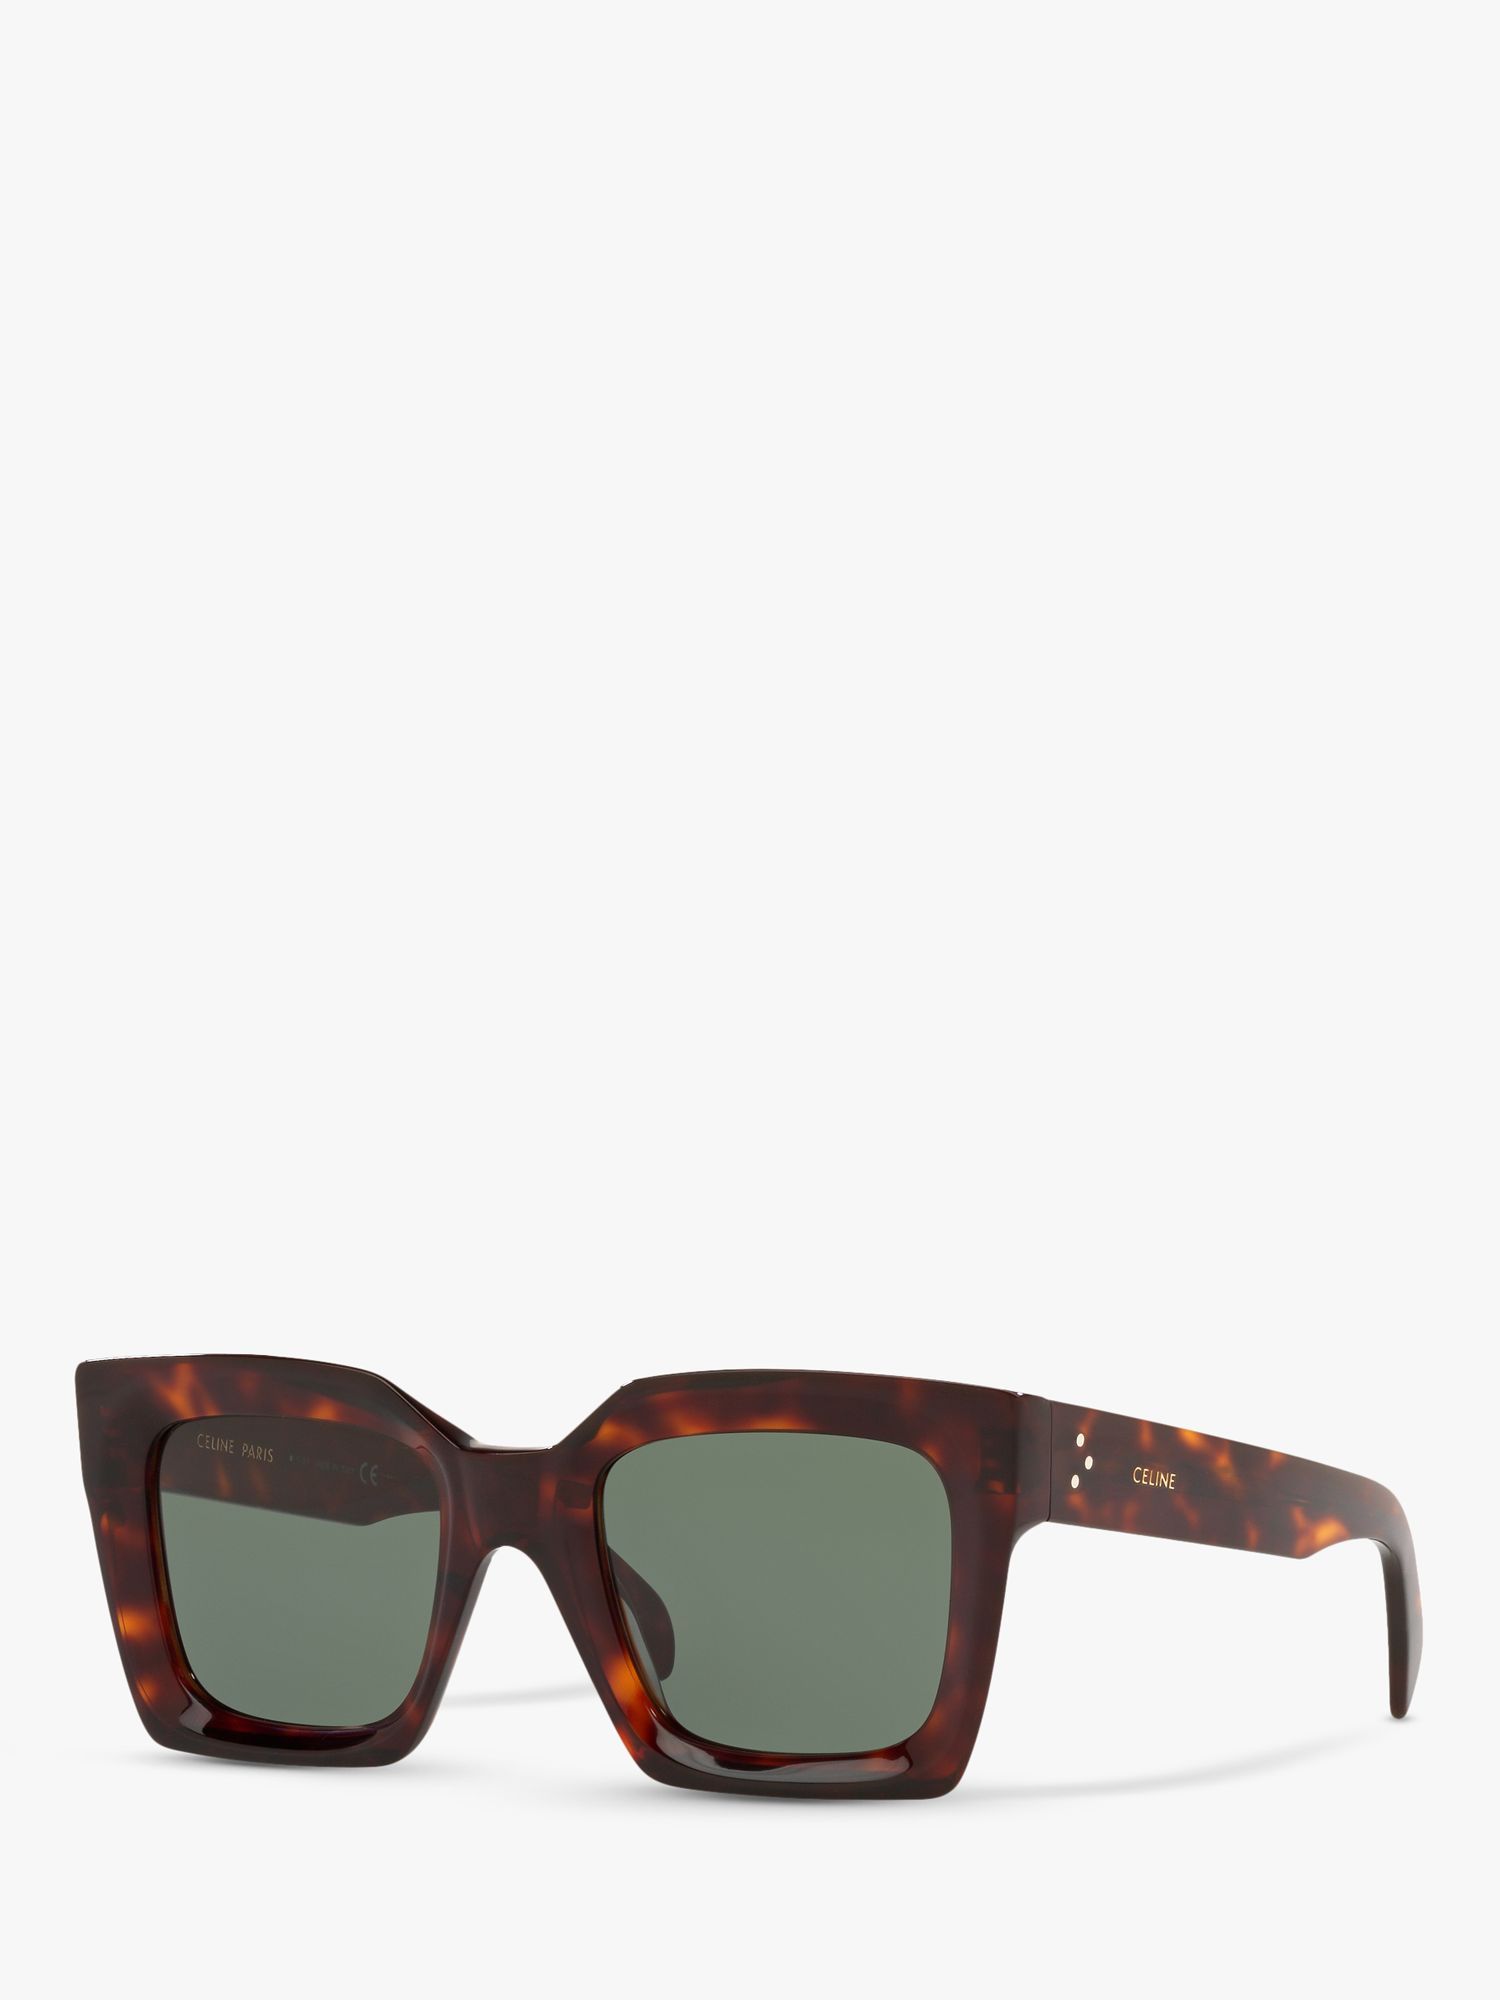 Celine CL000245 Women's Chunky Square Sunglasses, Tortoise/Grey | John Lewis (UK)